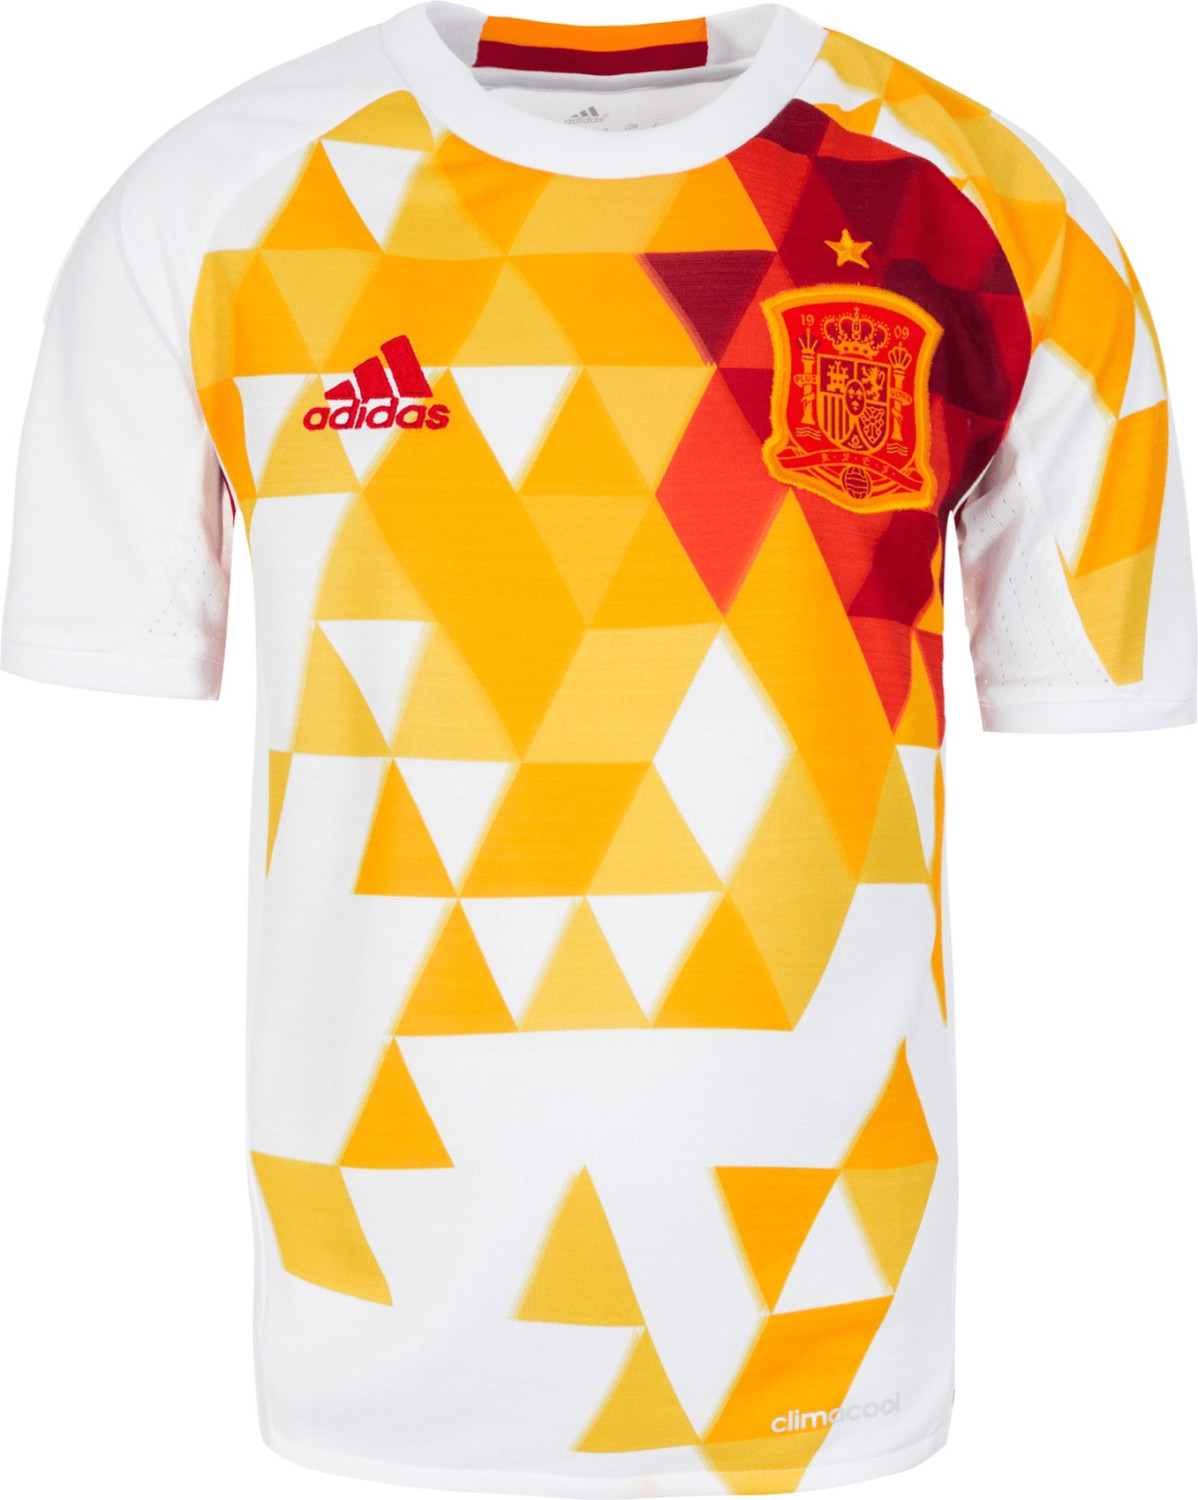 Adidas Camiseta infantil España 2016 desde 69,00 €